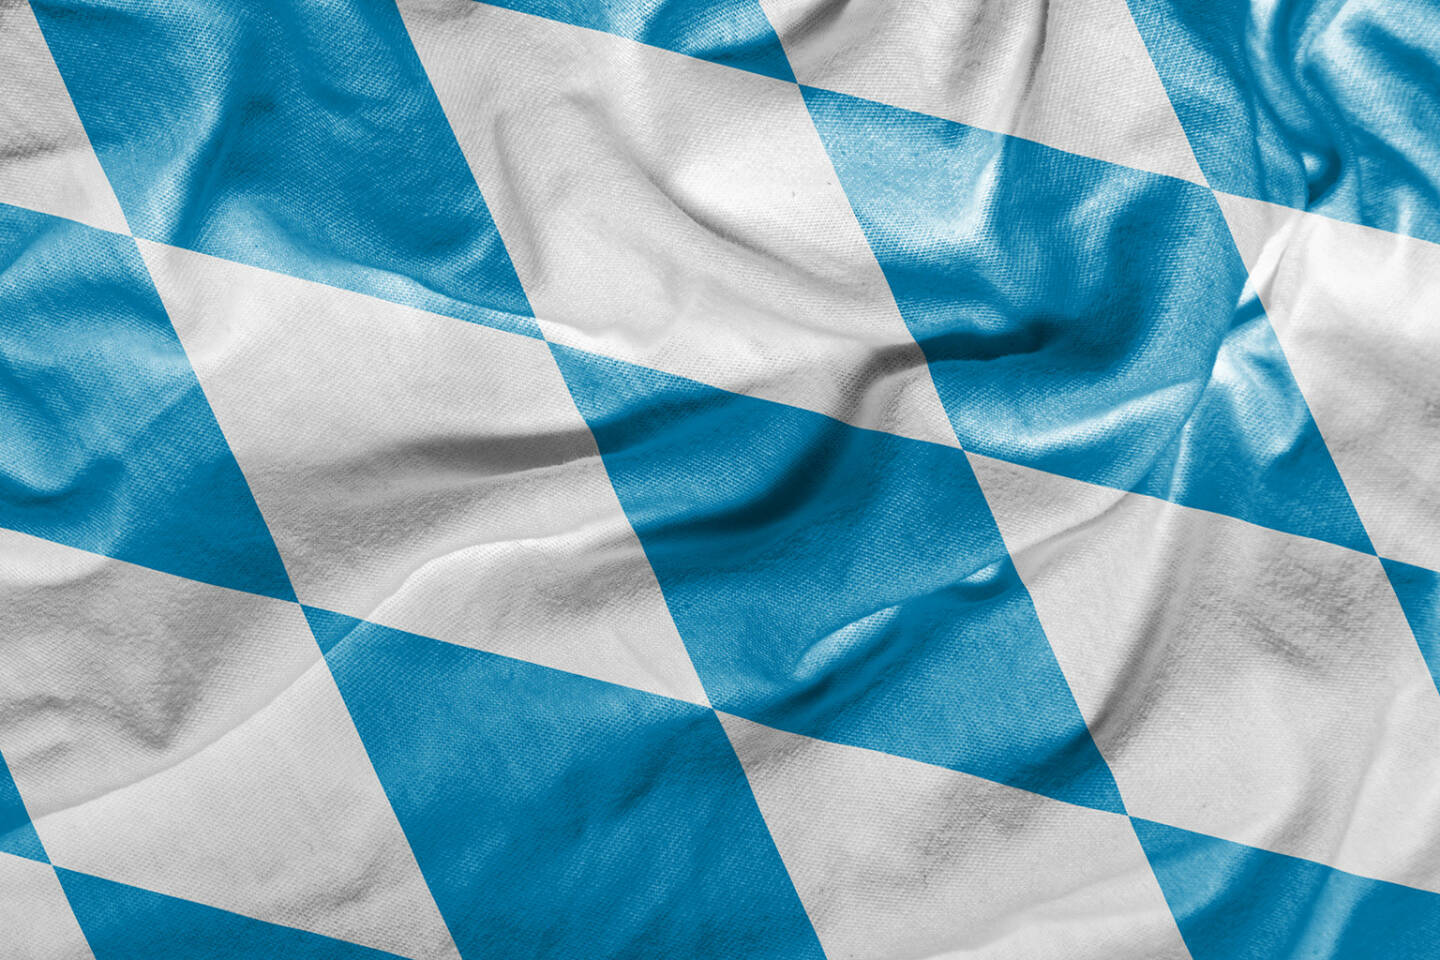 Bayern, Flagge, Blau, Weiss, http://www.shutterstock.com/de/pic-158324261/stock-photo-amazing-flag-of-bavaria-state-in-germany-europe.html (Bild: shutterstock.com)